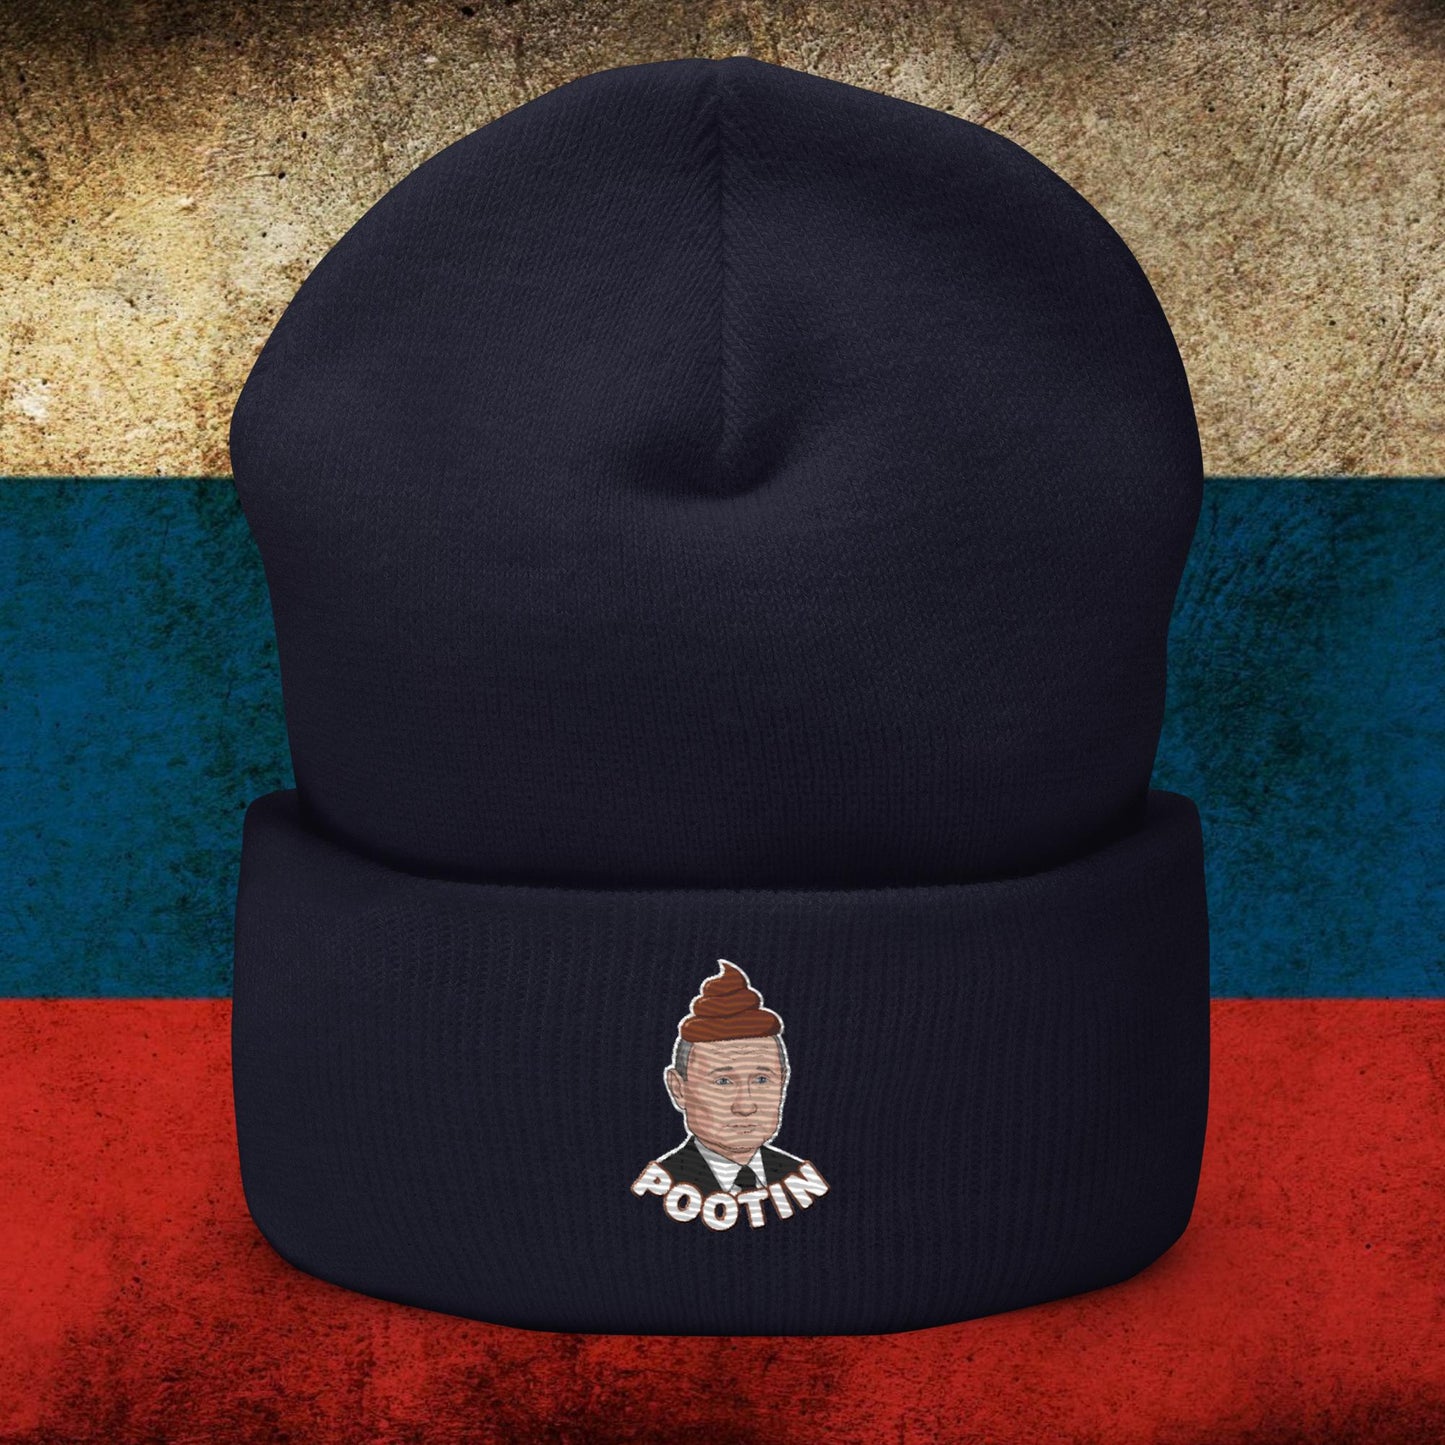 Pootin Funny Anti Vladimir Putin Cuffed Beanie Next Cult Brand